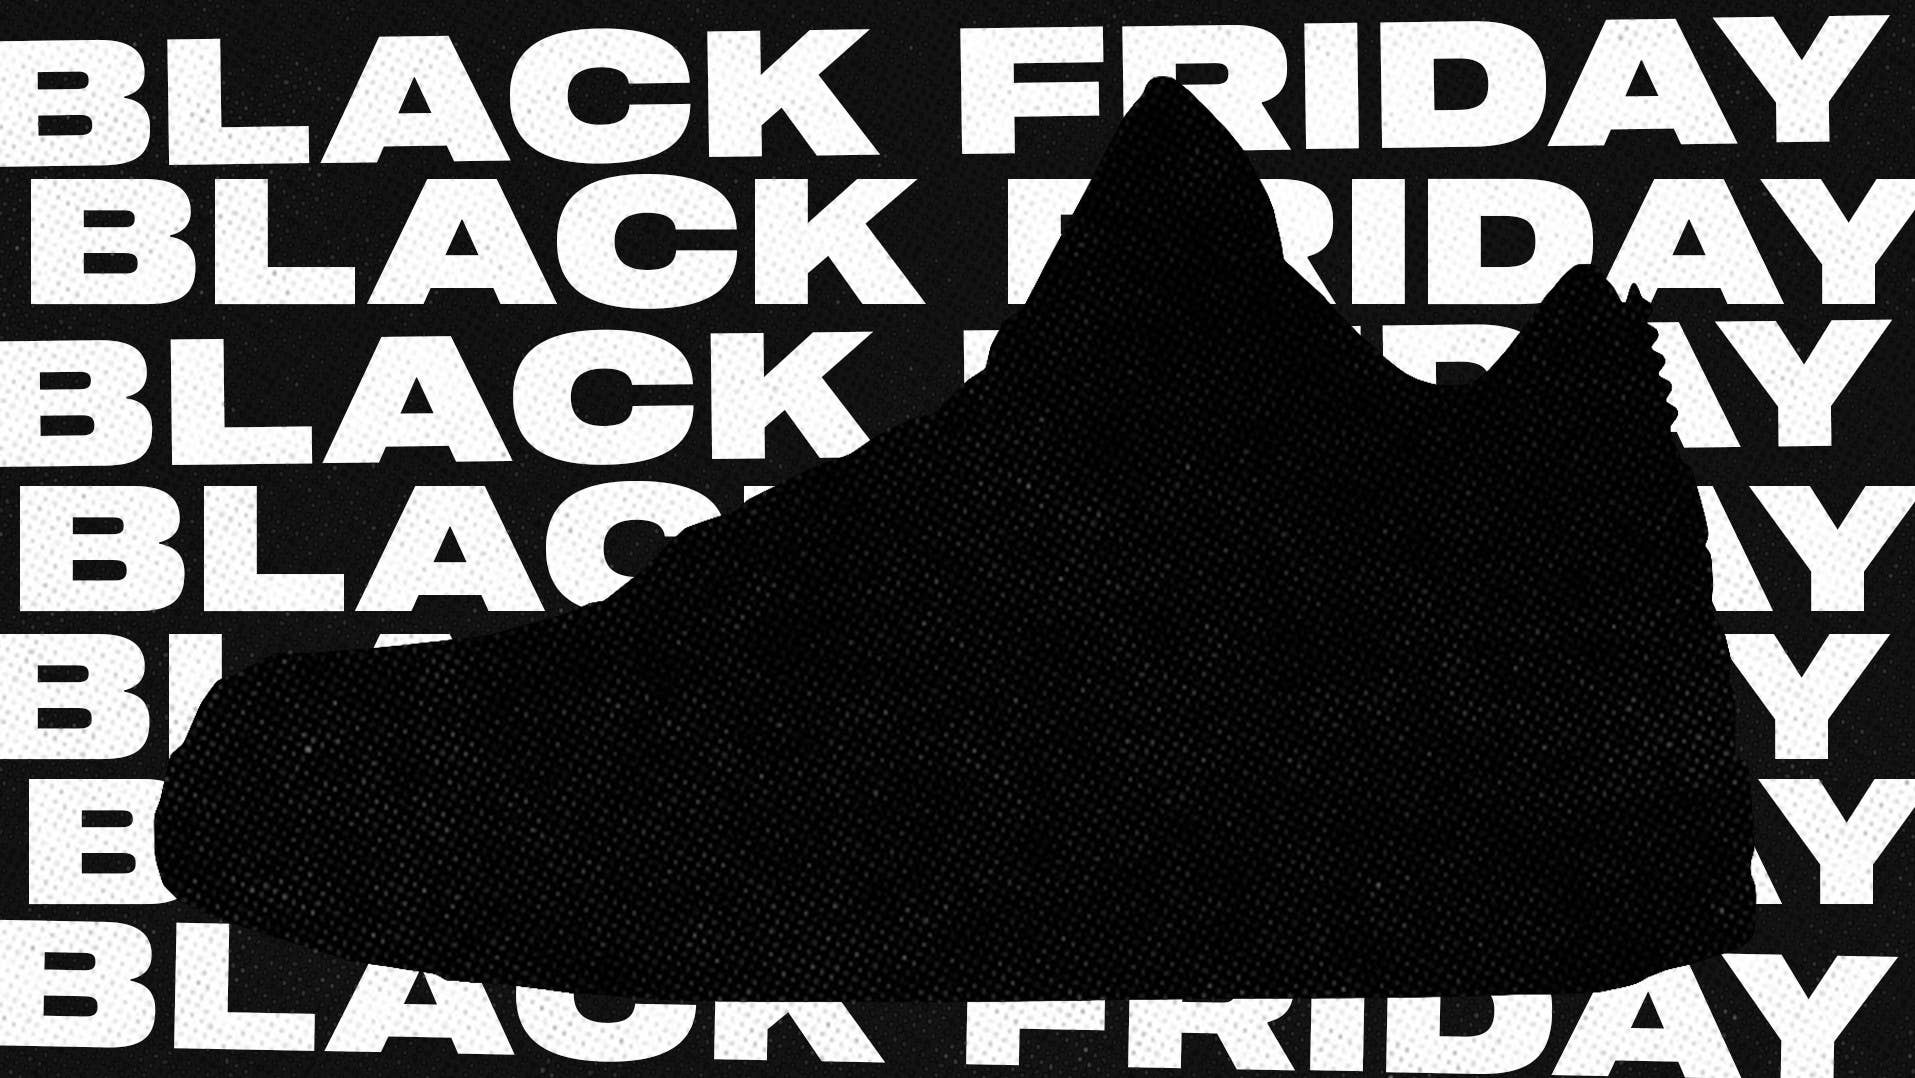 Black Friday 2020 Sneaker Deals Sale